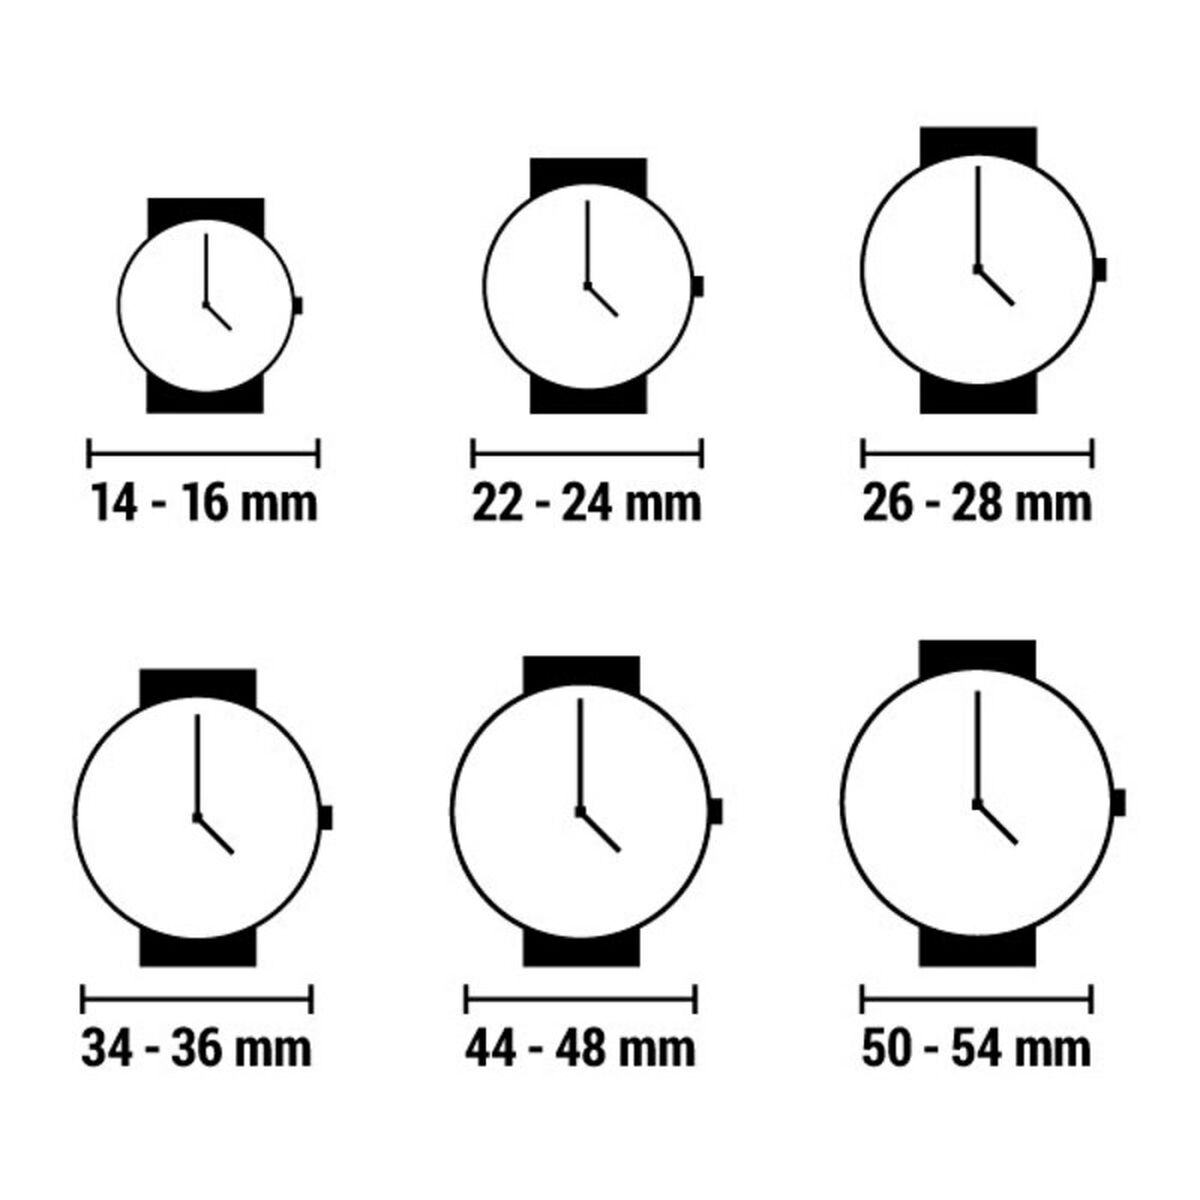 Horloge Heren Police R1471668002 (Ø 48 mm)